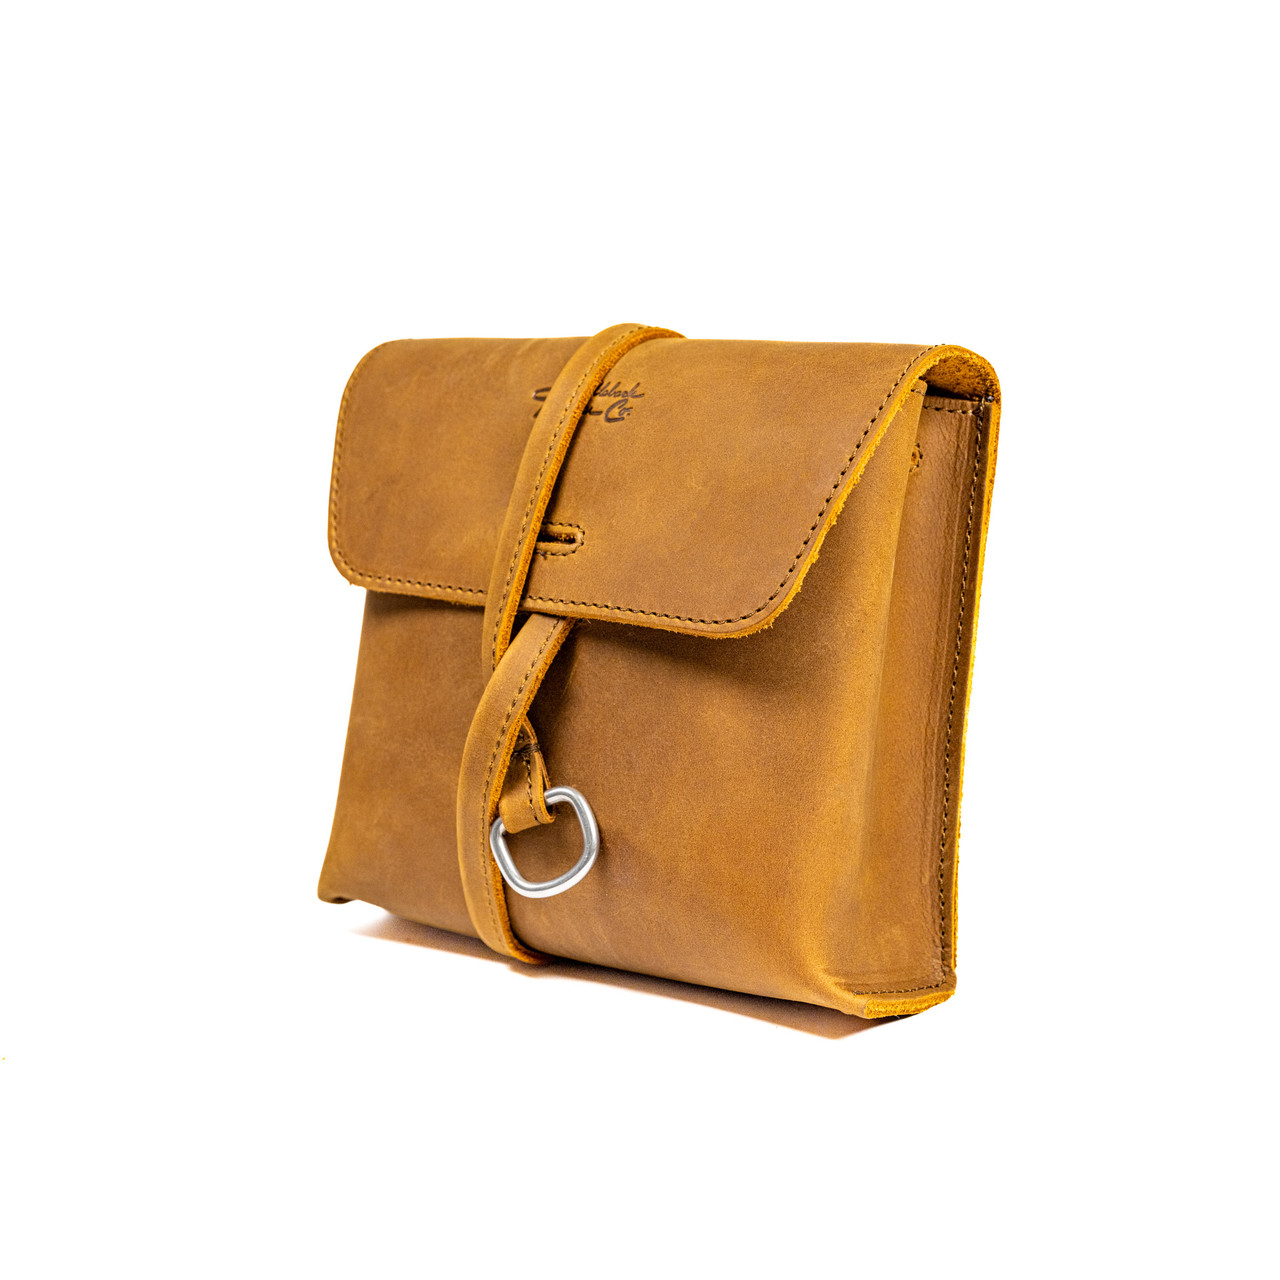 Handmade leather Purse organizer bag organizer large removable bag insert  handbag organizer in color of your bag